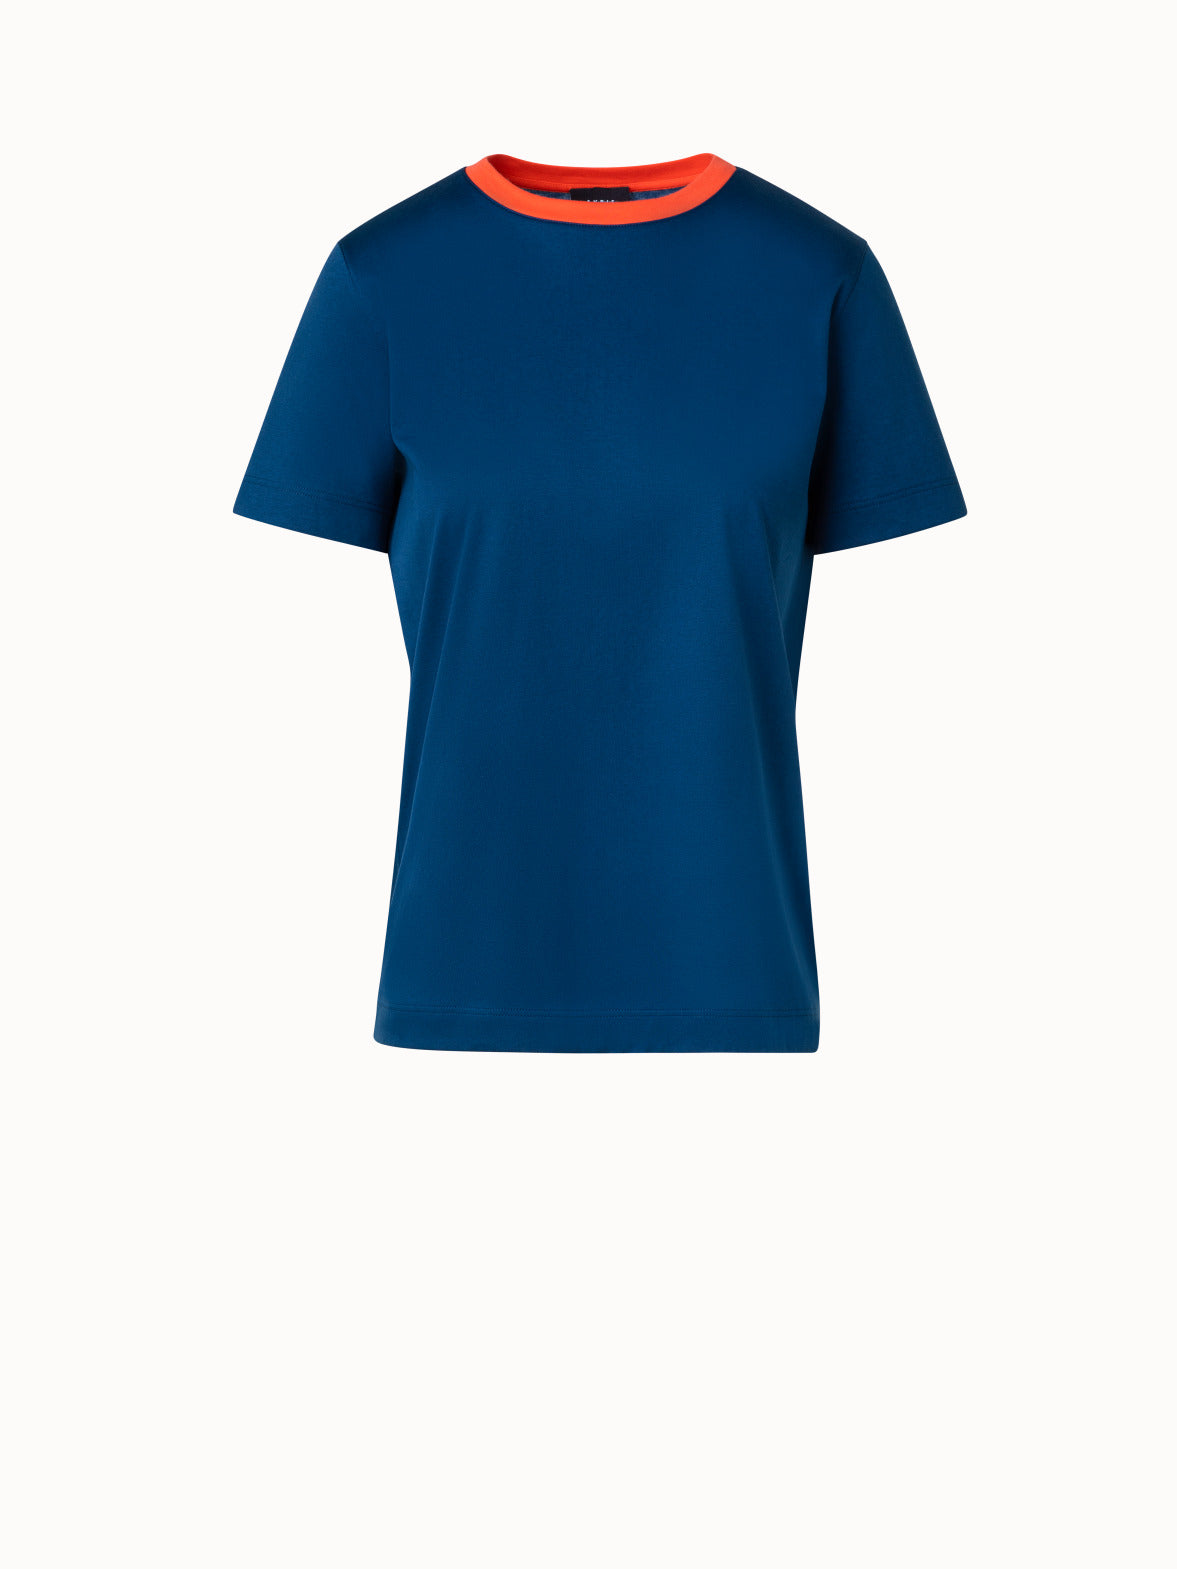 Cotton Jersey T-Shirt with Neckline Block Color